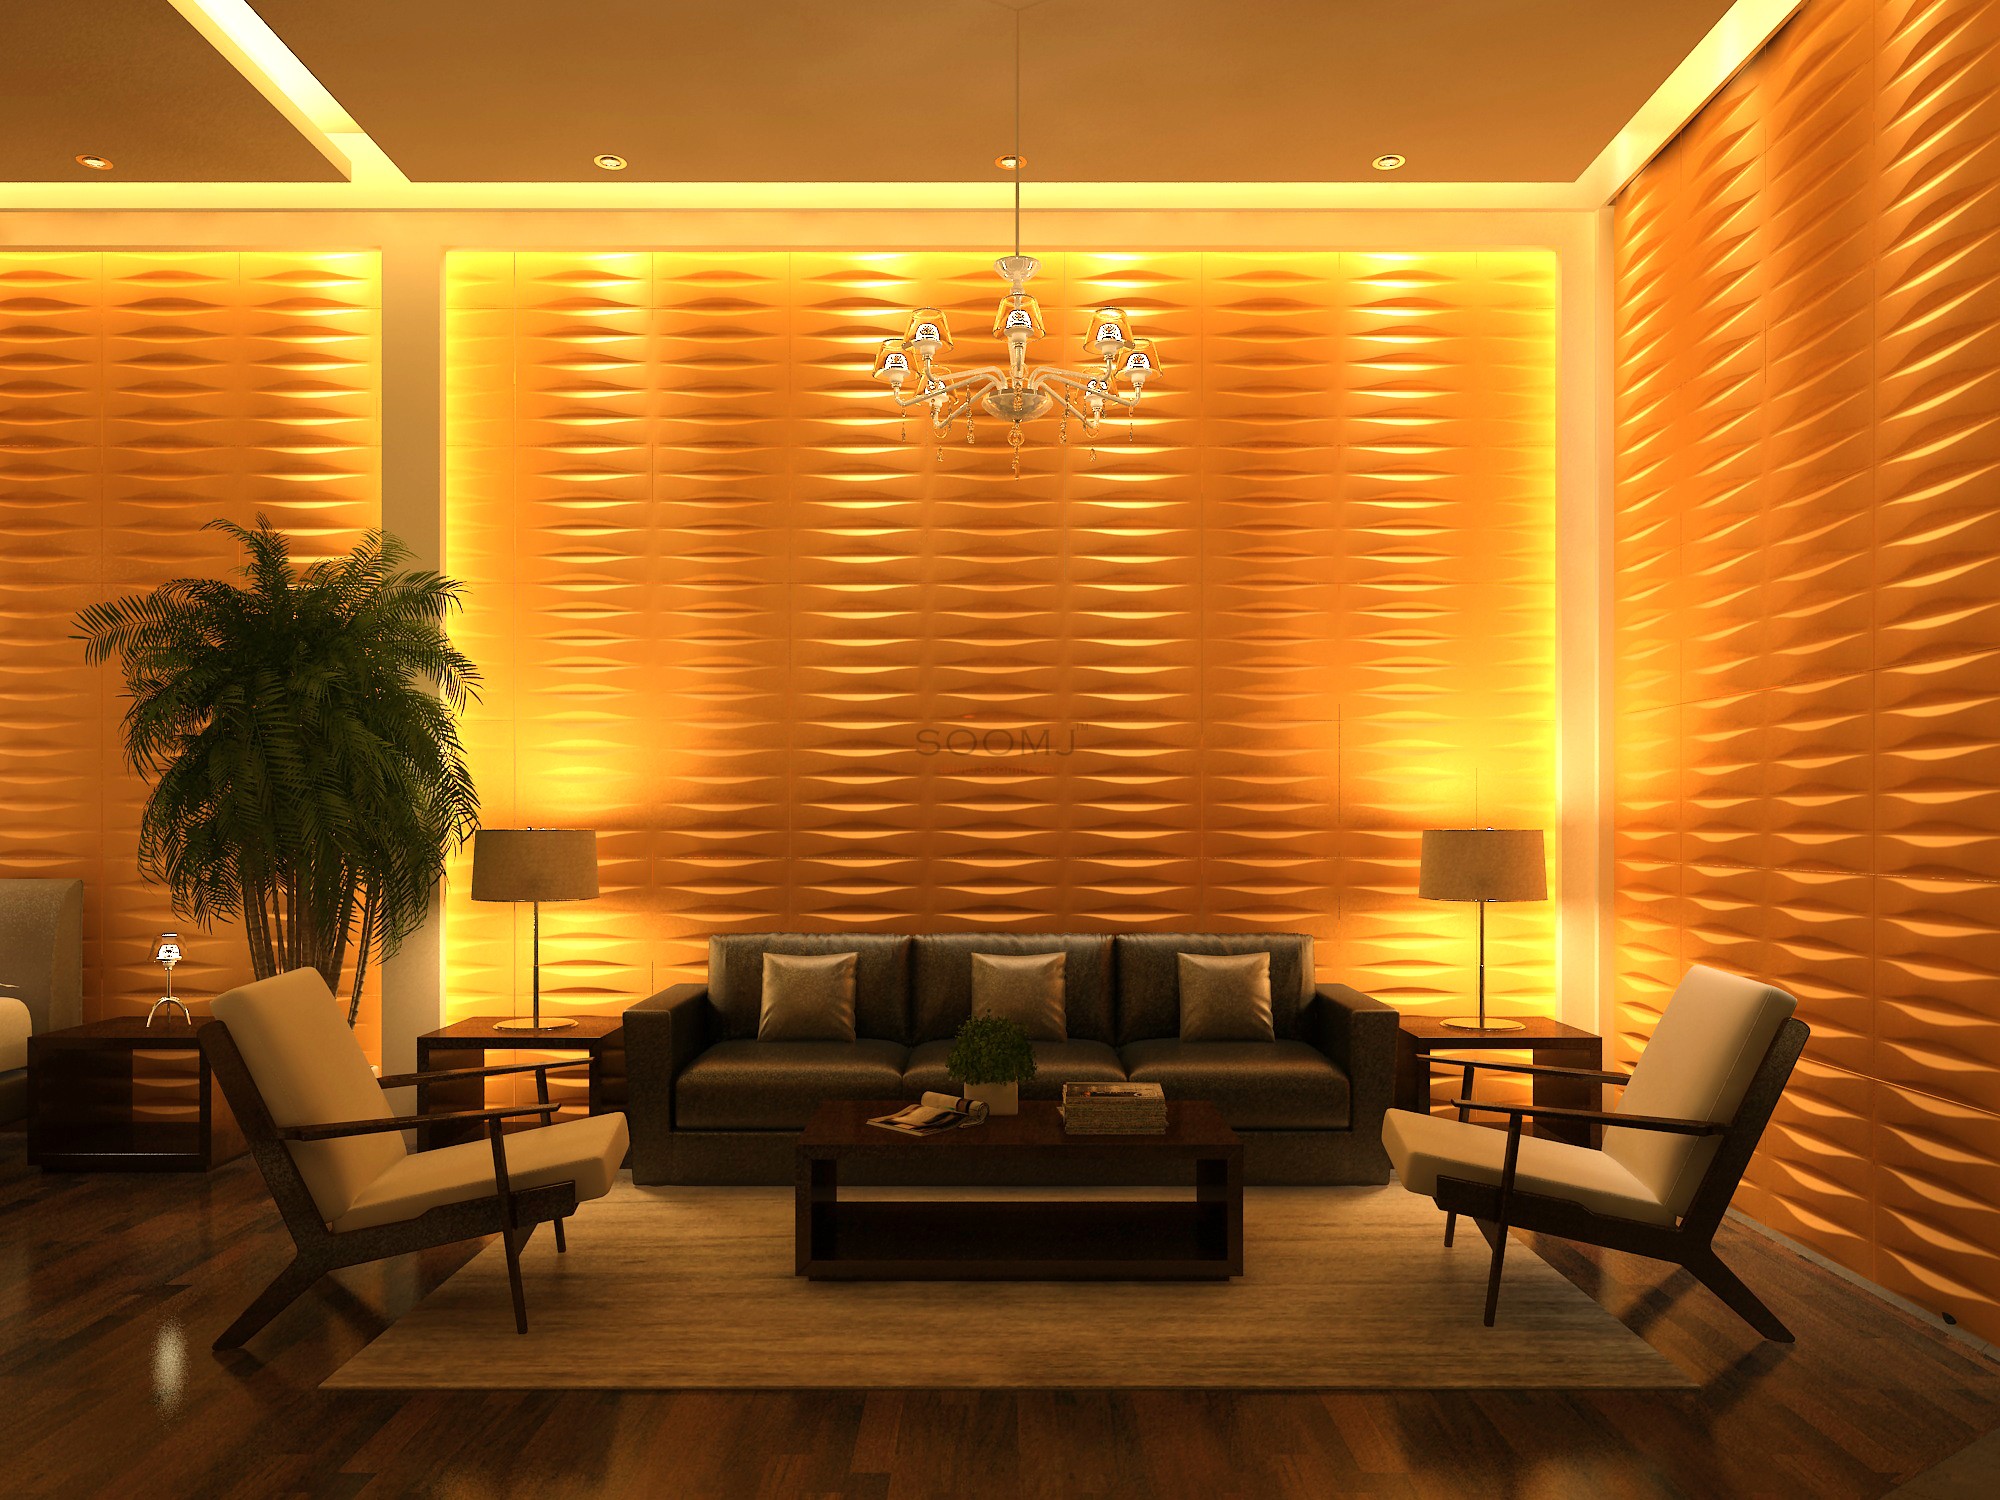   Decorative  Interior 3D Wall  Panels Textured Wall  Decor 